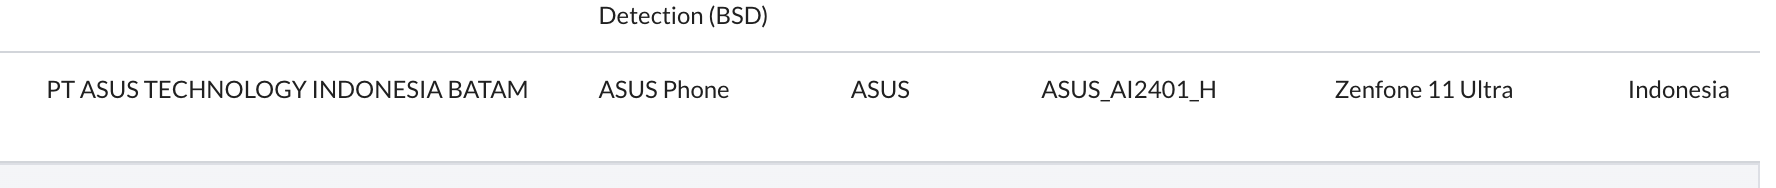 Asus-Zenfone-11-Ultra-bestaetigt.png